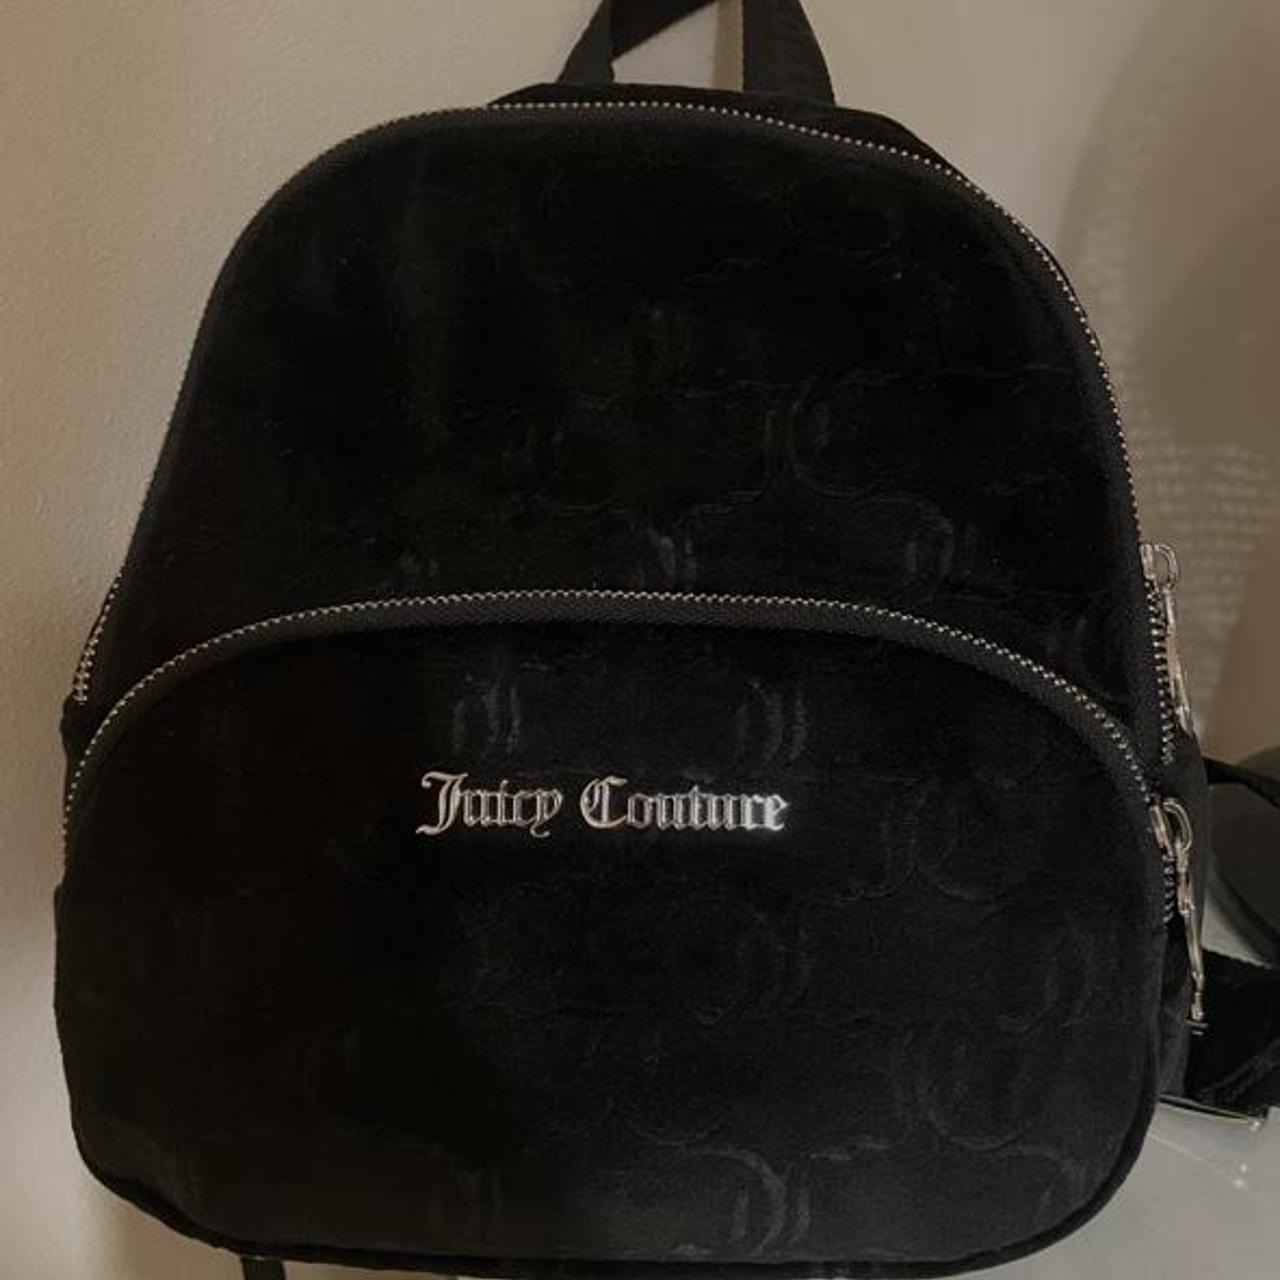 Juicy couture mini backpack black Look stylish - Depop